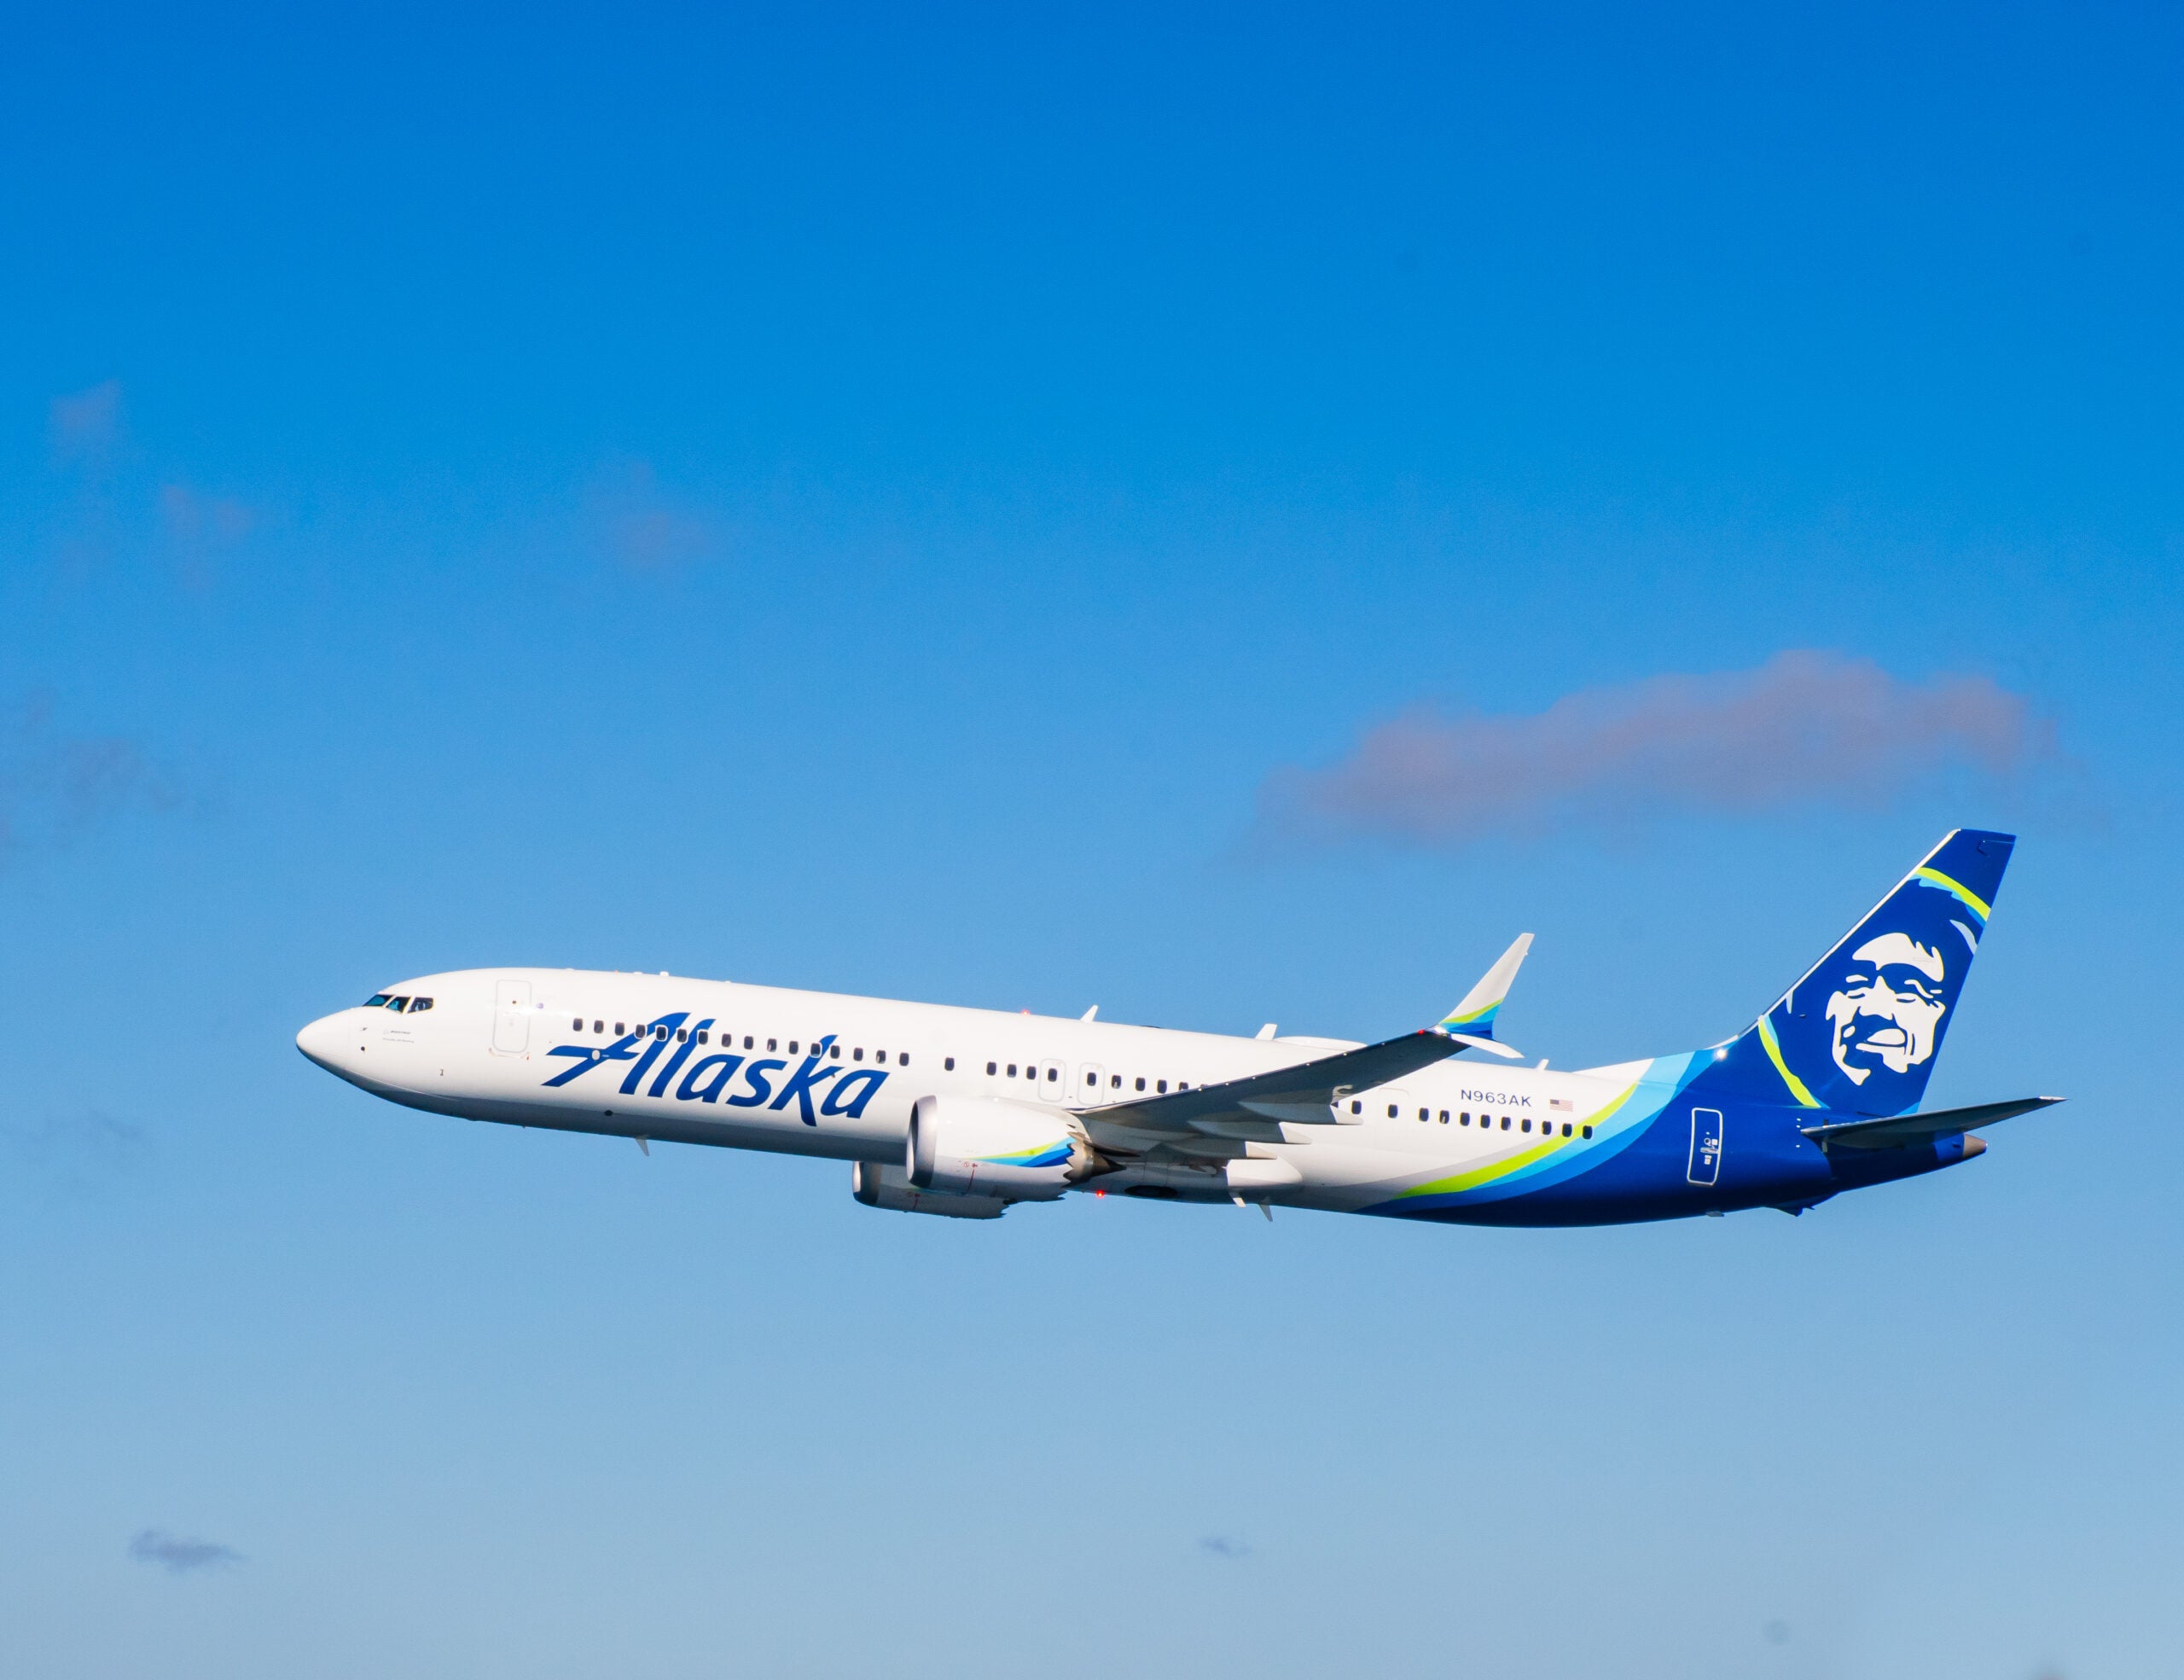 Additional Passengers Sue Alaska Airlines, Boeing